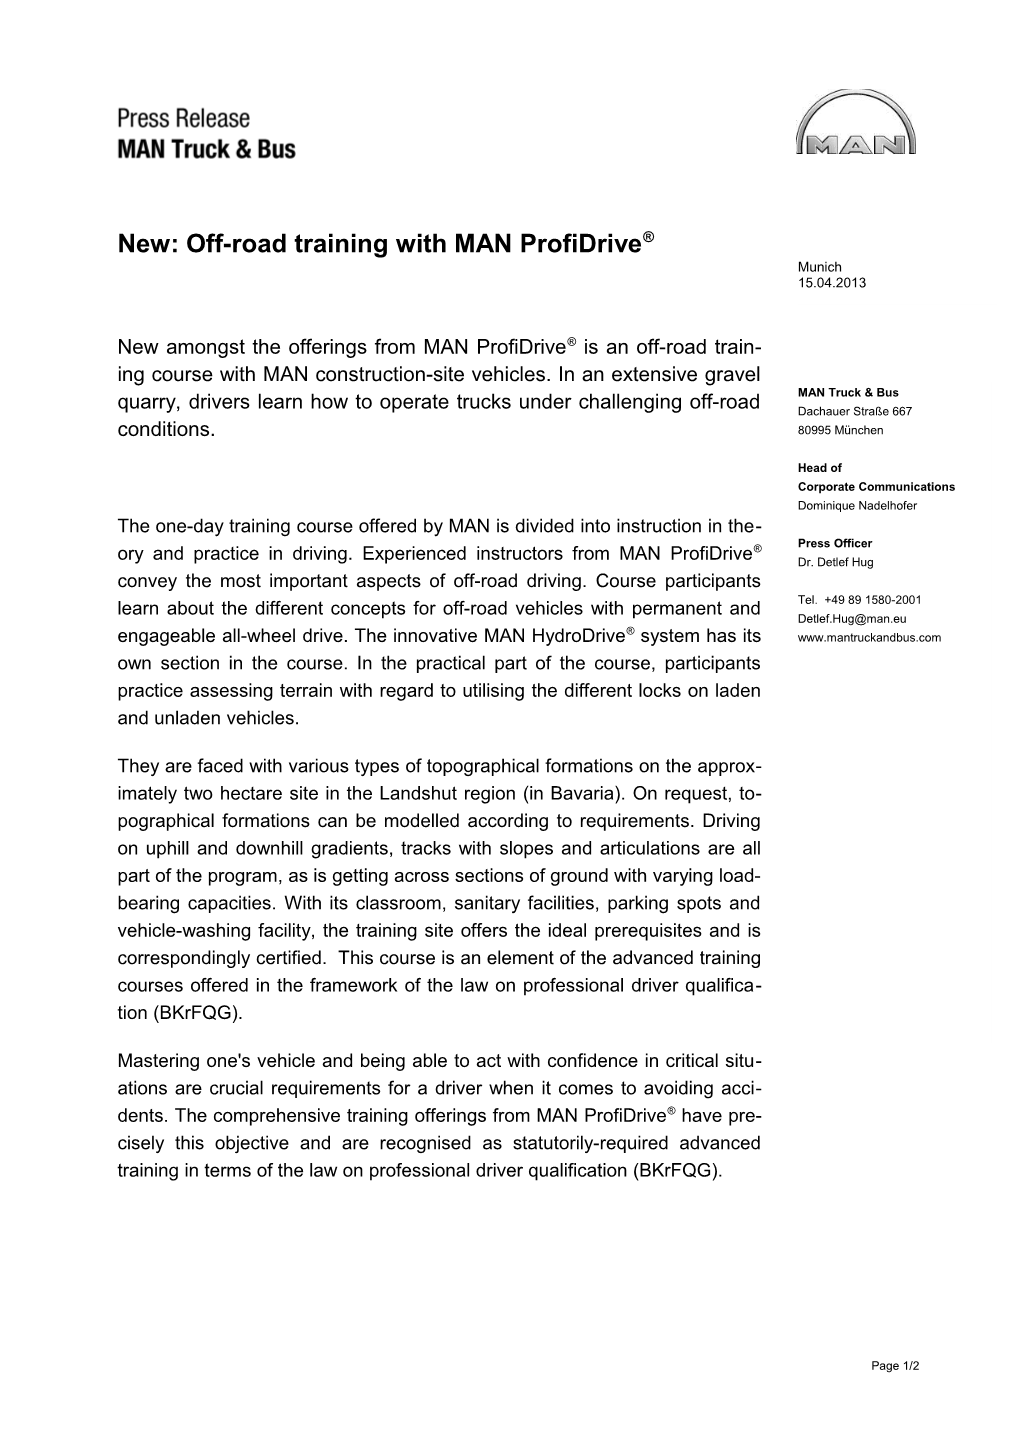 New: Off-Road Training with MAN Profidrive